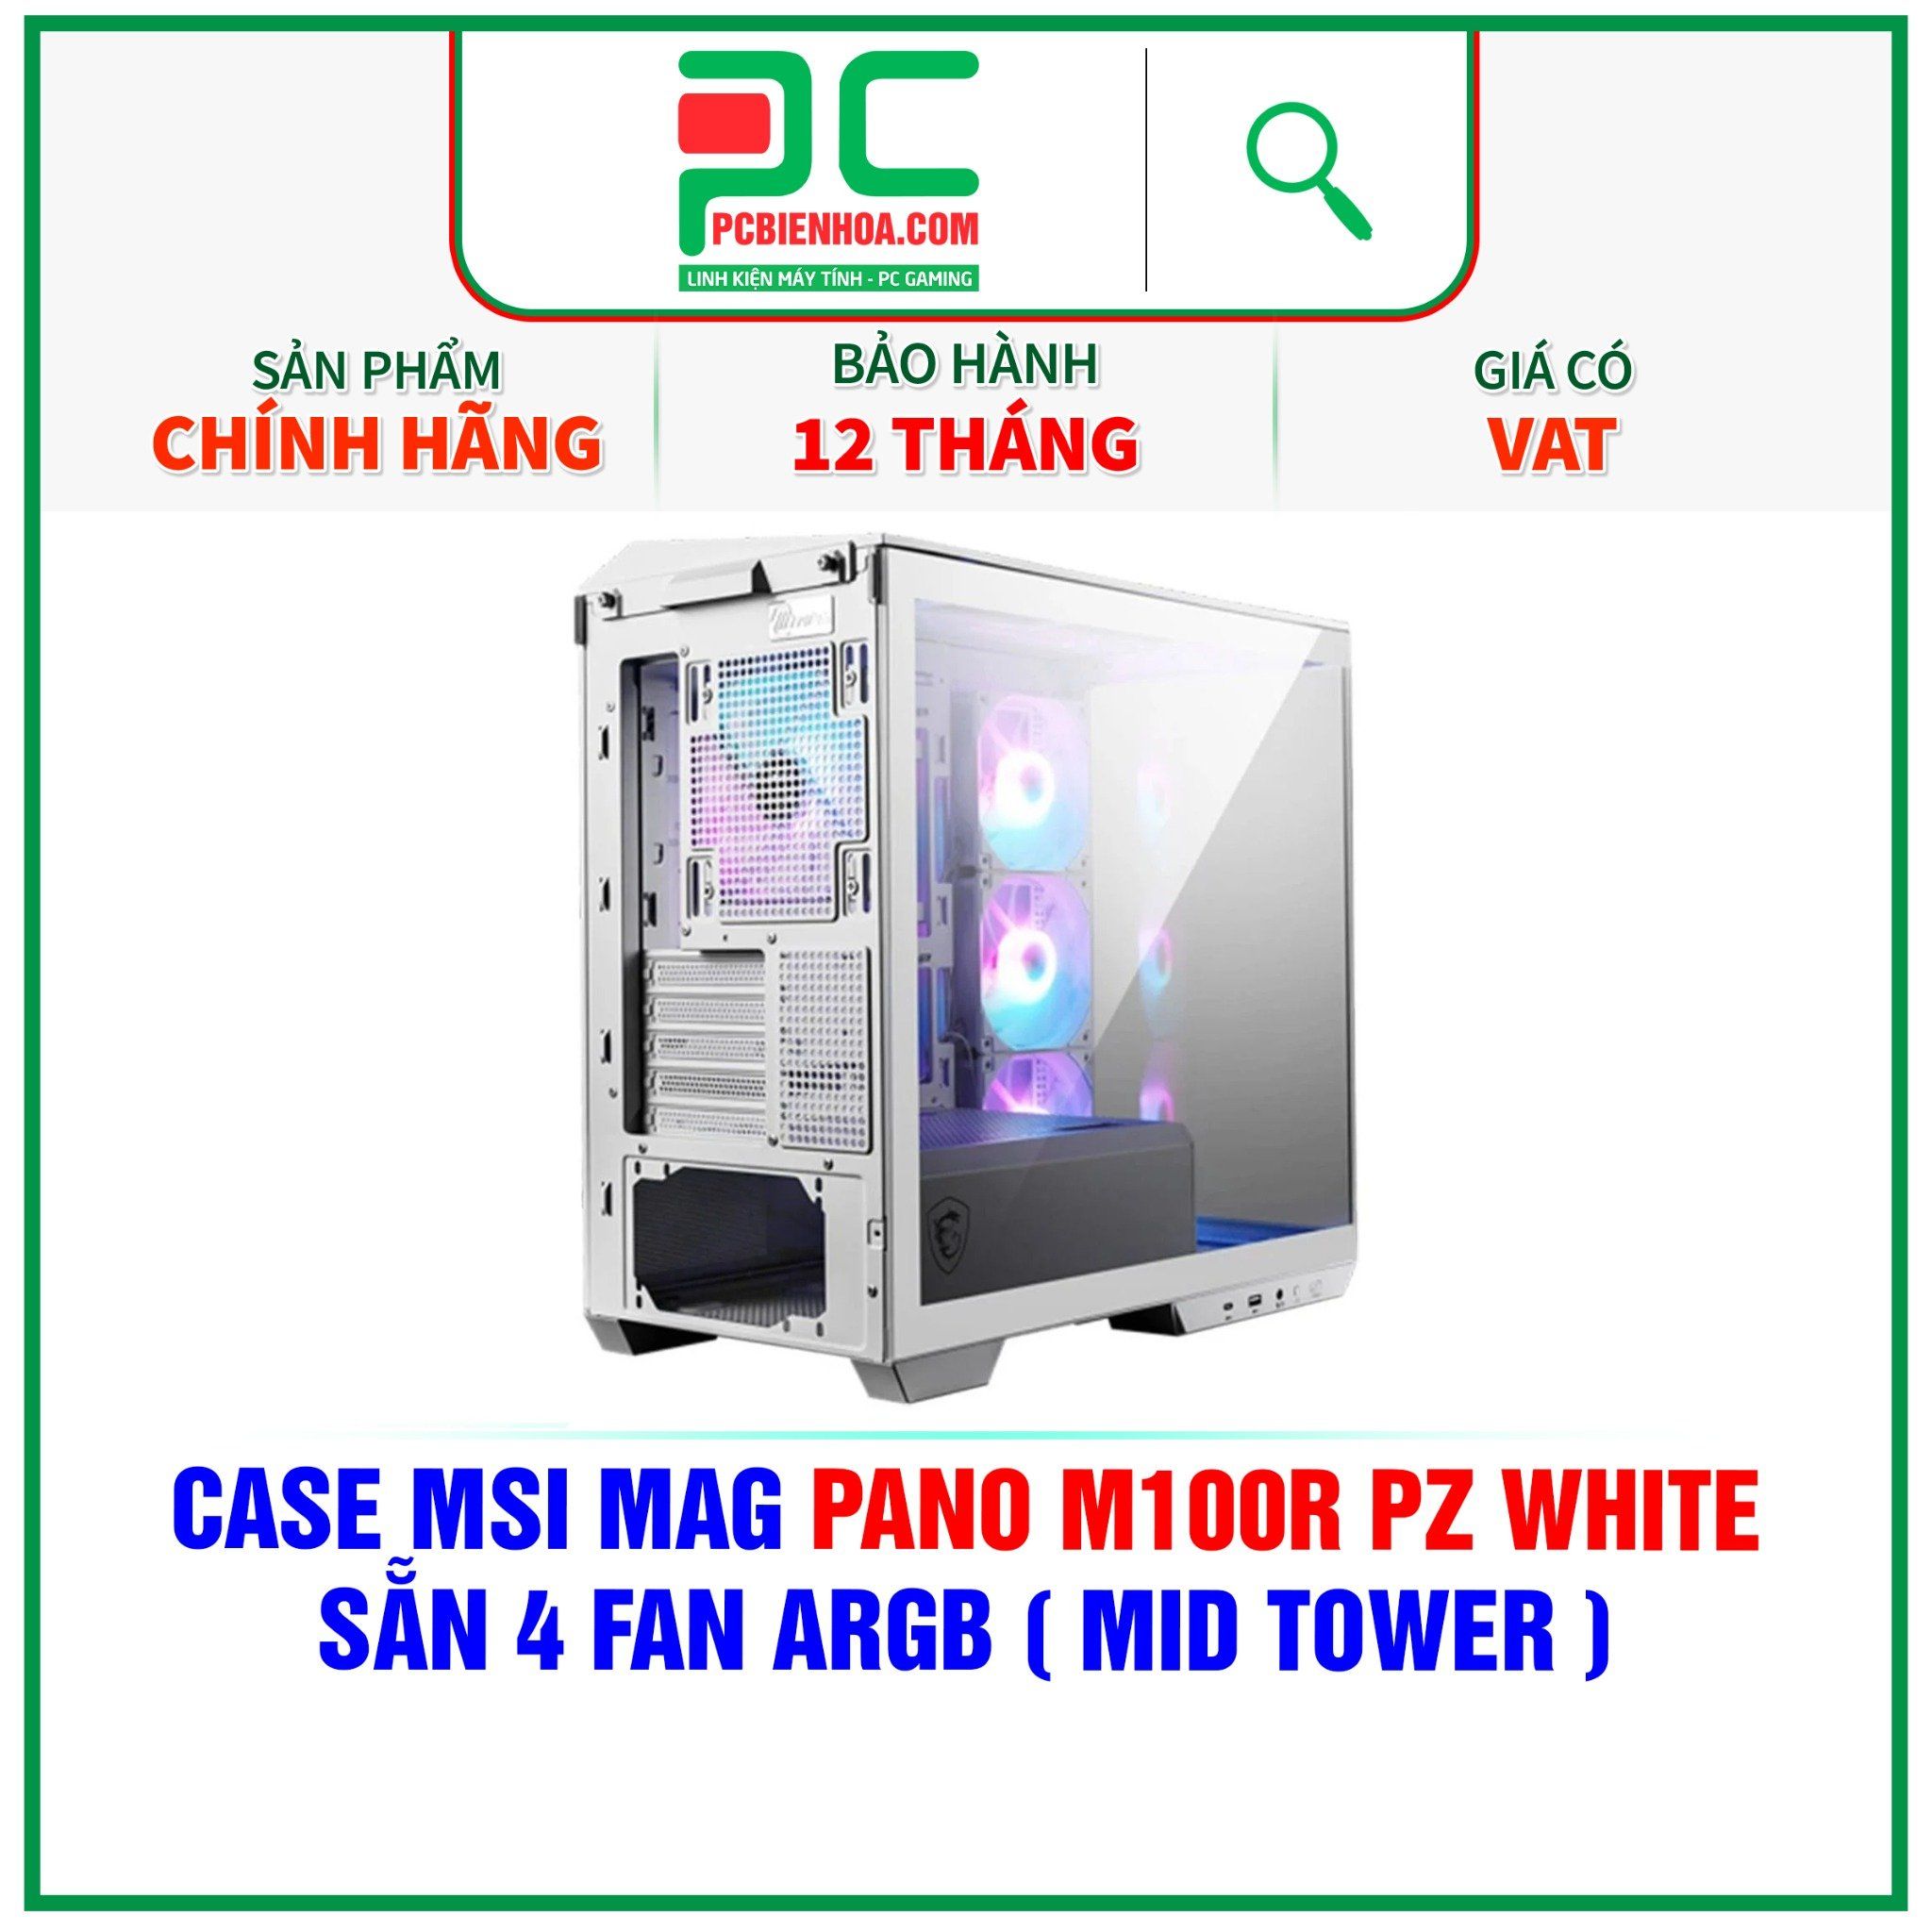  CASE MSI MAG PANO M100R PZ WHITE - SẴN 4 FAN ARGB ( MID TOWER ) 